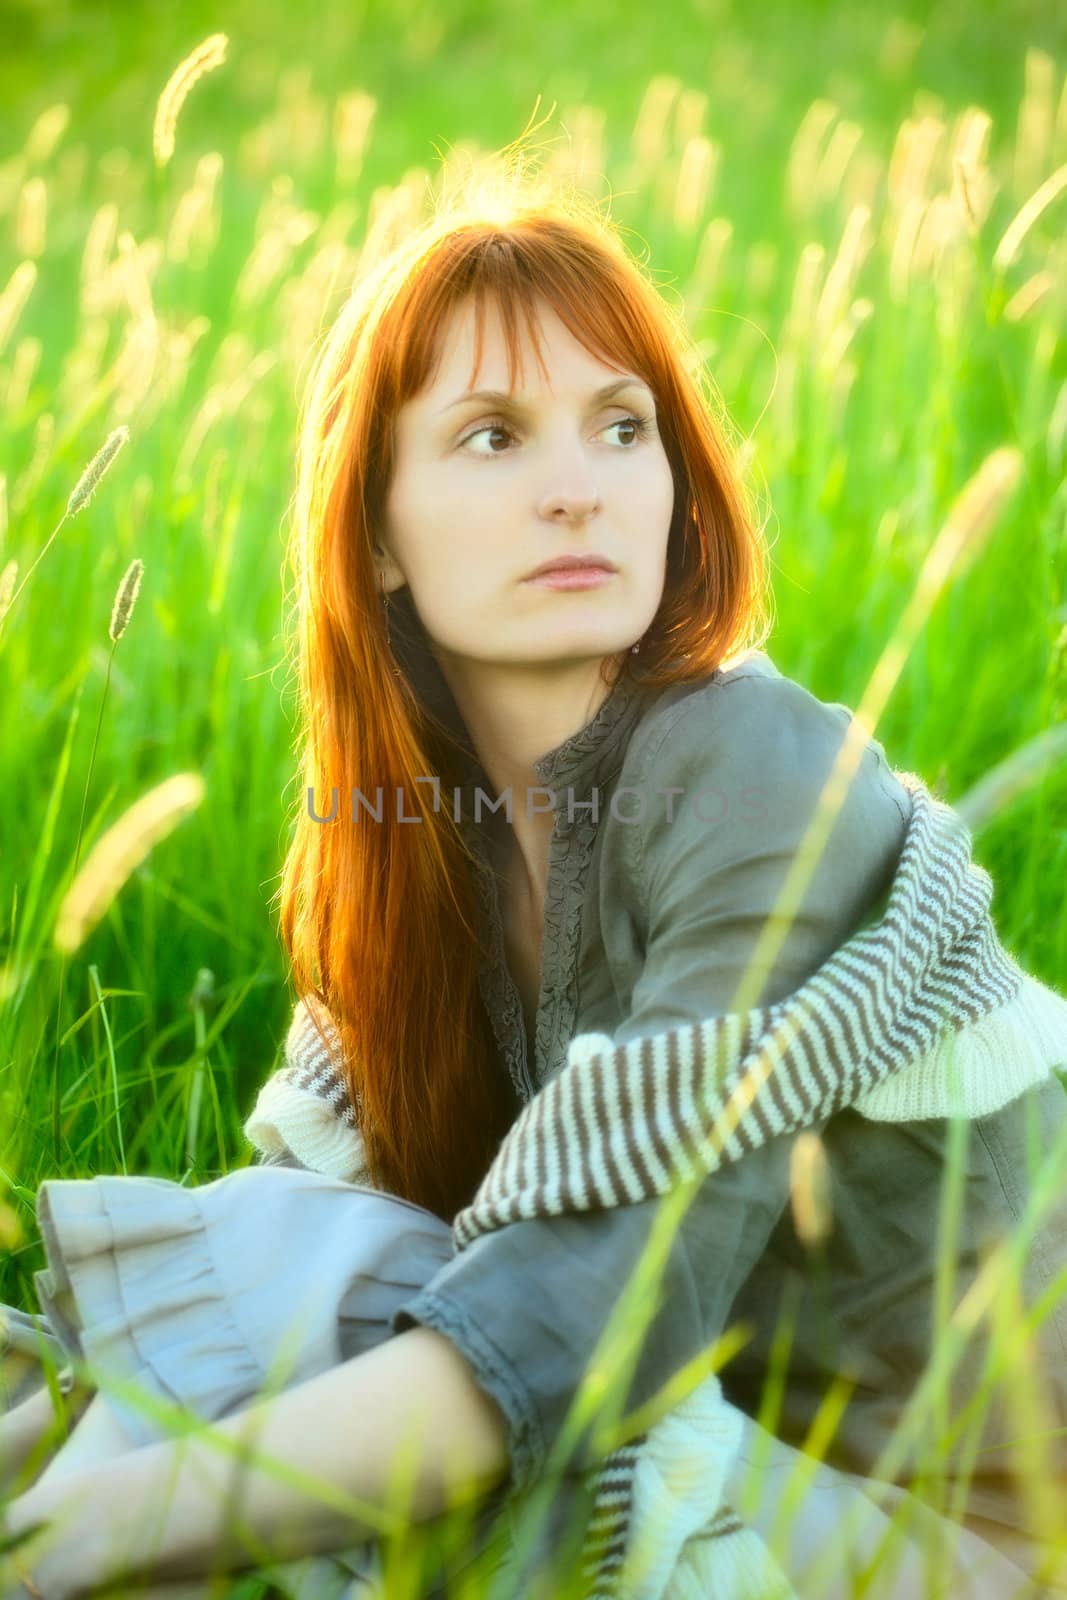 sad redhead woman in grass by petr_malyshev